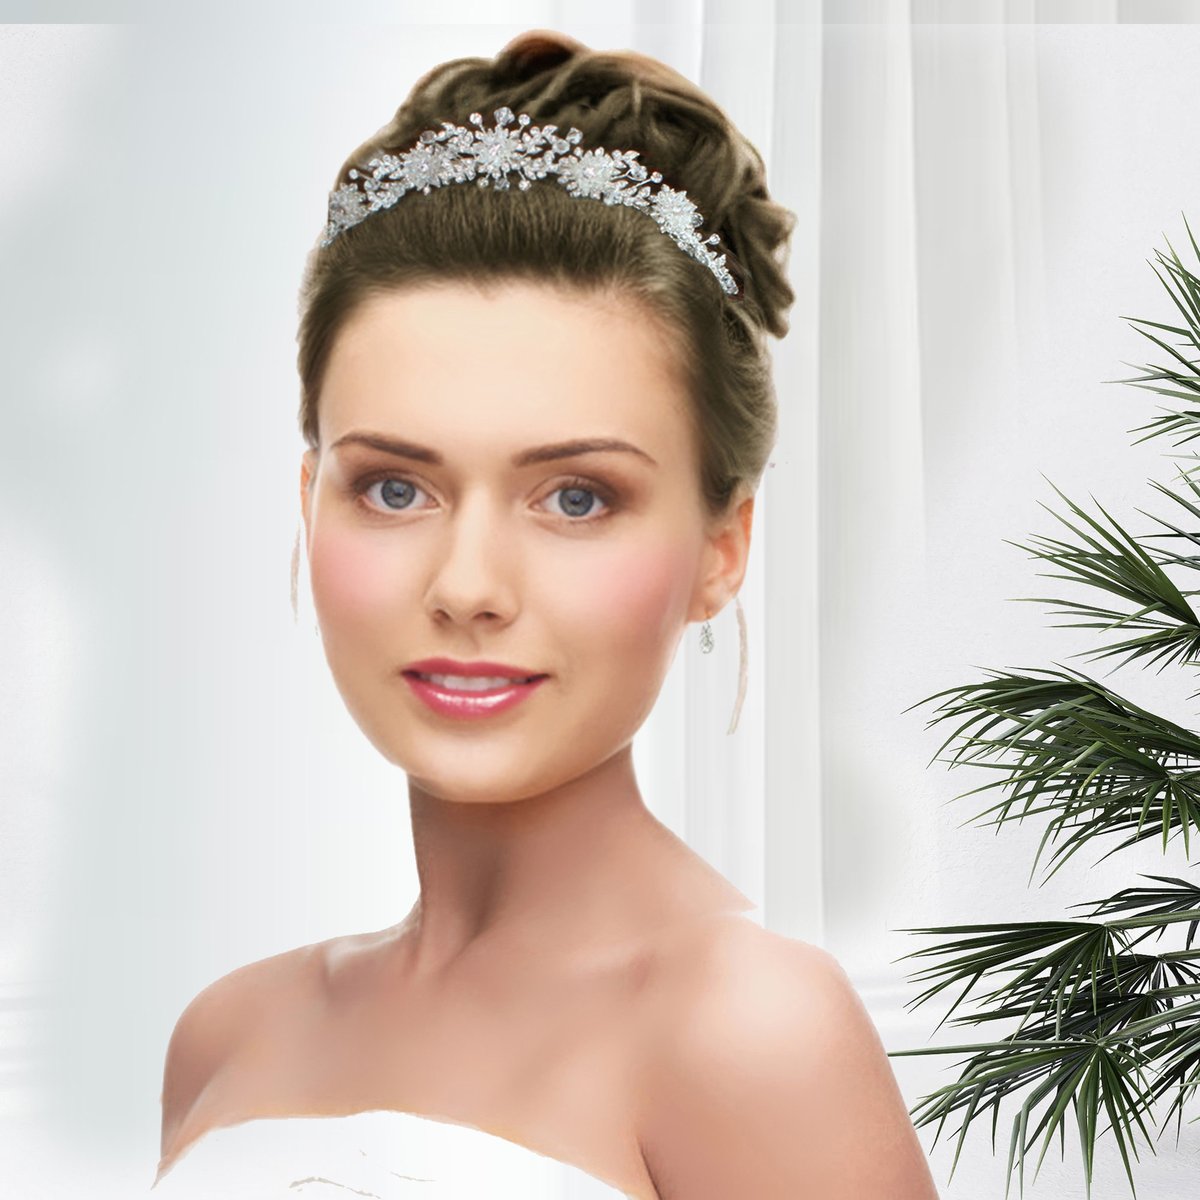 Crystal Bridal Tiara - Emmerline #2022bride #crystaltiaras
Buy here tiarasandco.co.uk/product-page/c…